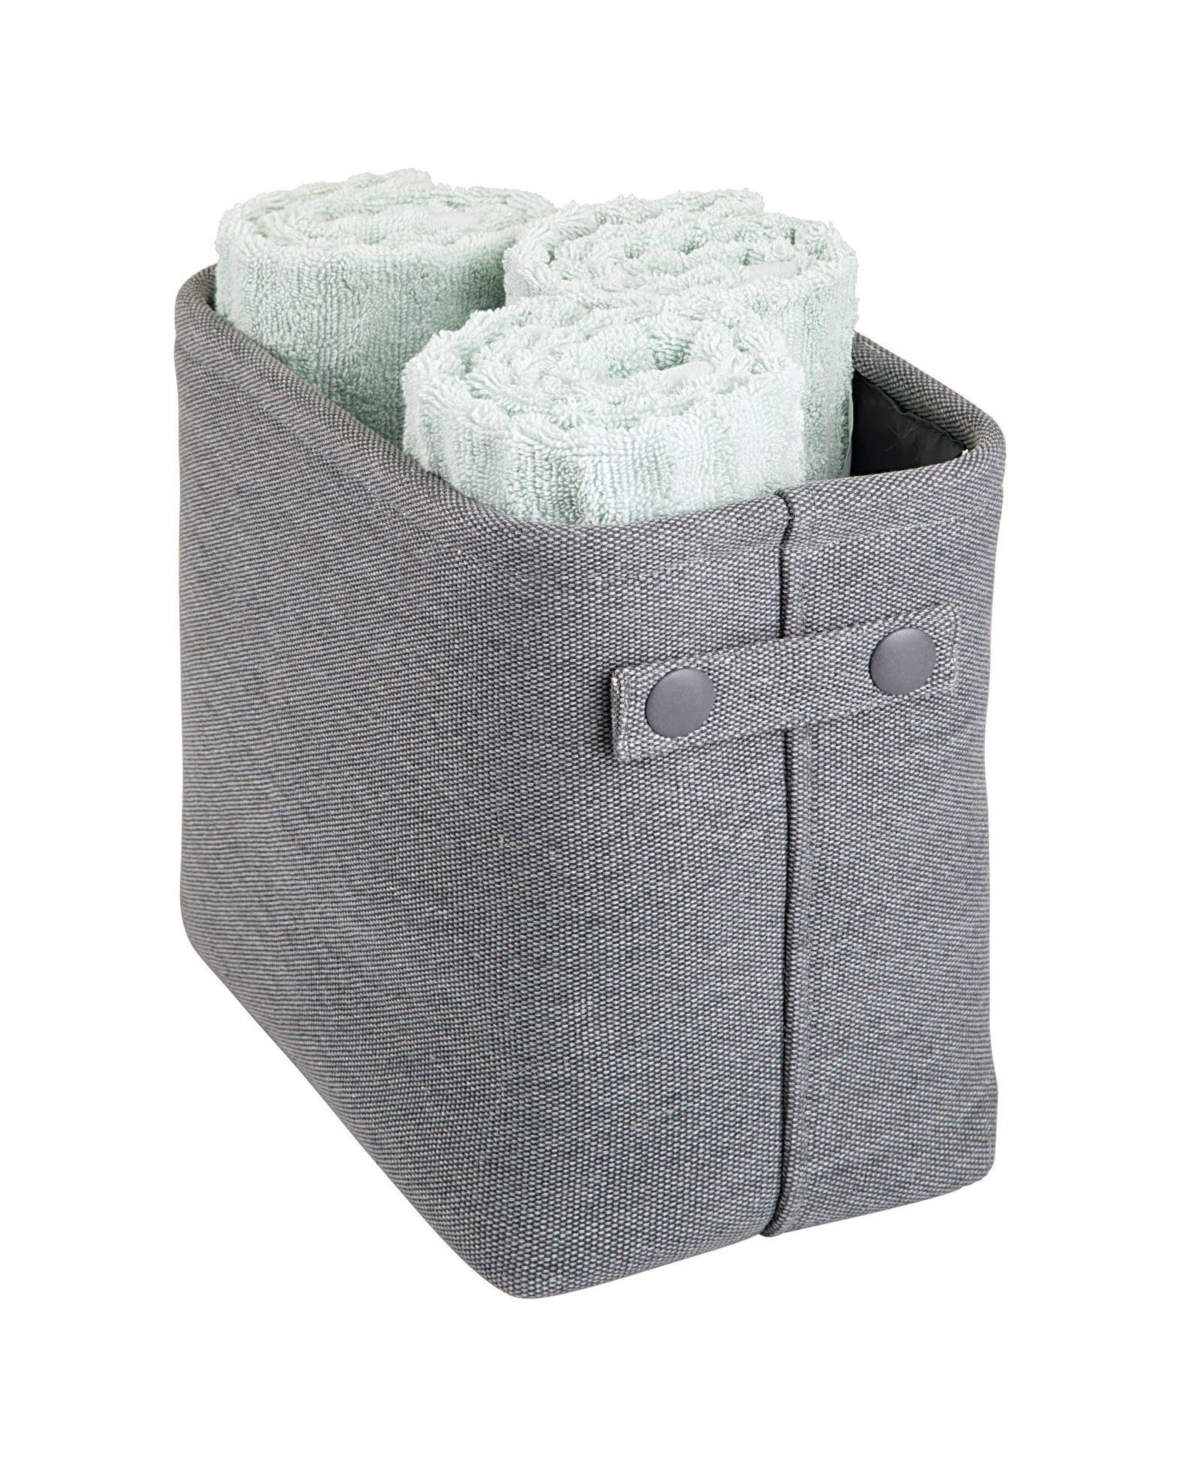 Narrow Bathroom Fabric Storage Bin Basket with Handles - Charcoal Gray - Gray